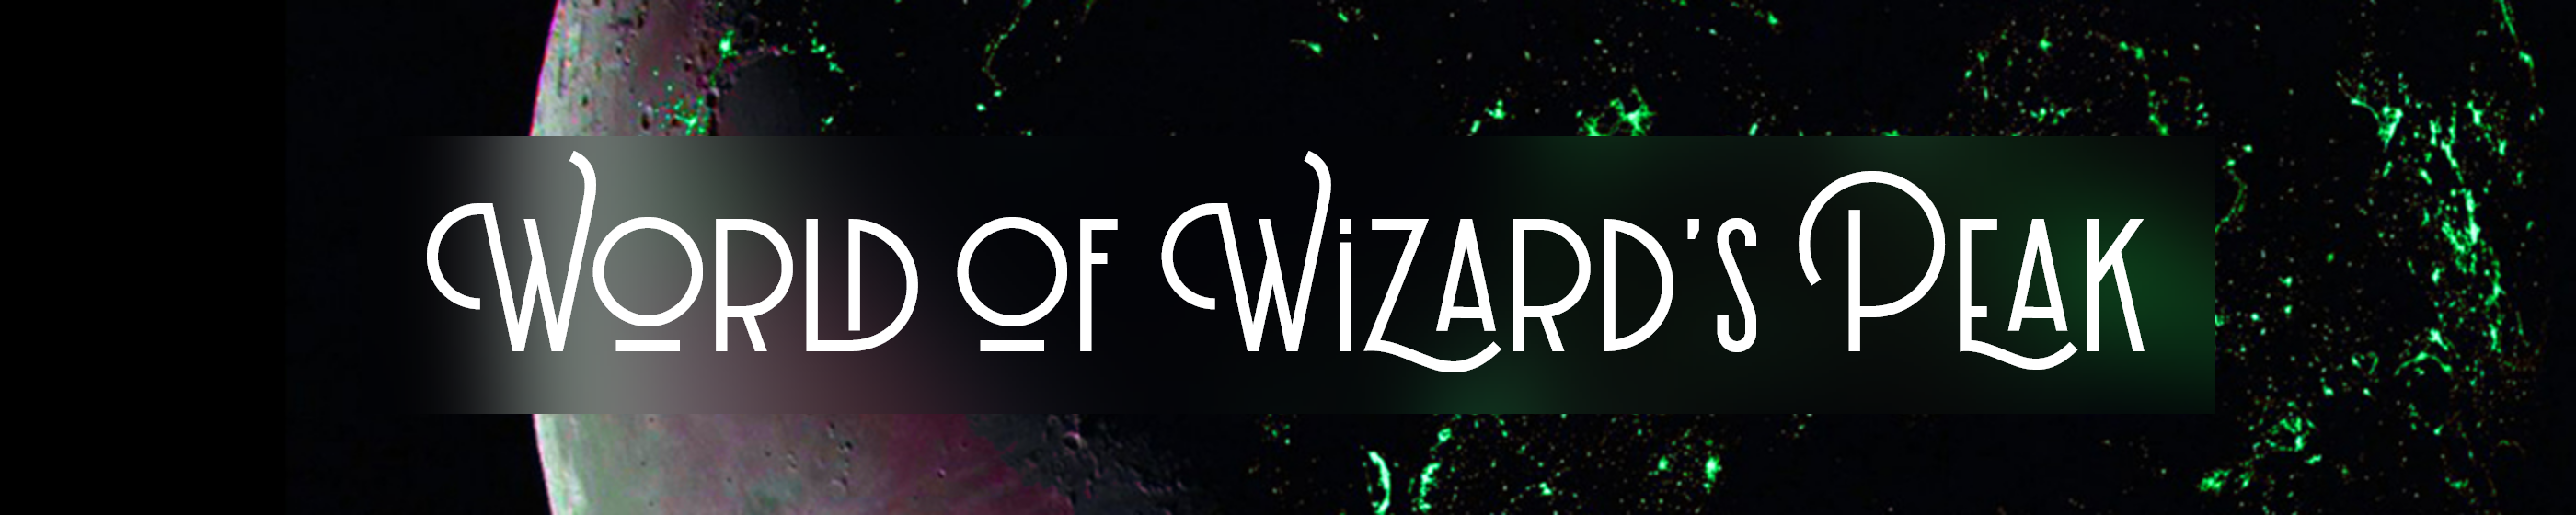 World of Wizard's Peak world cover